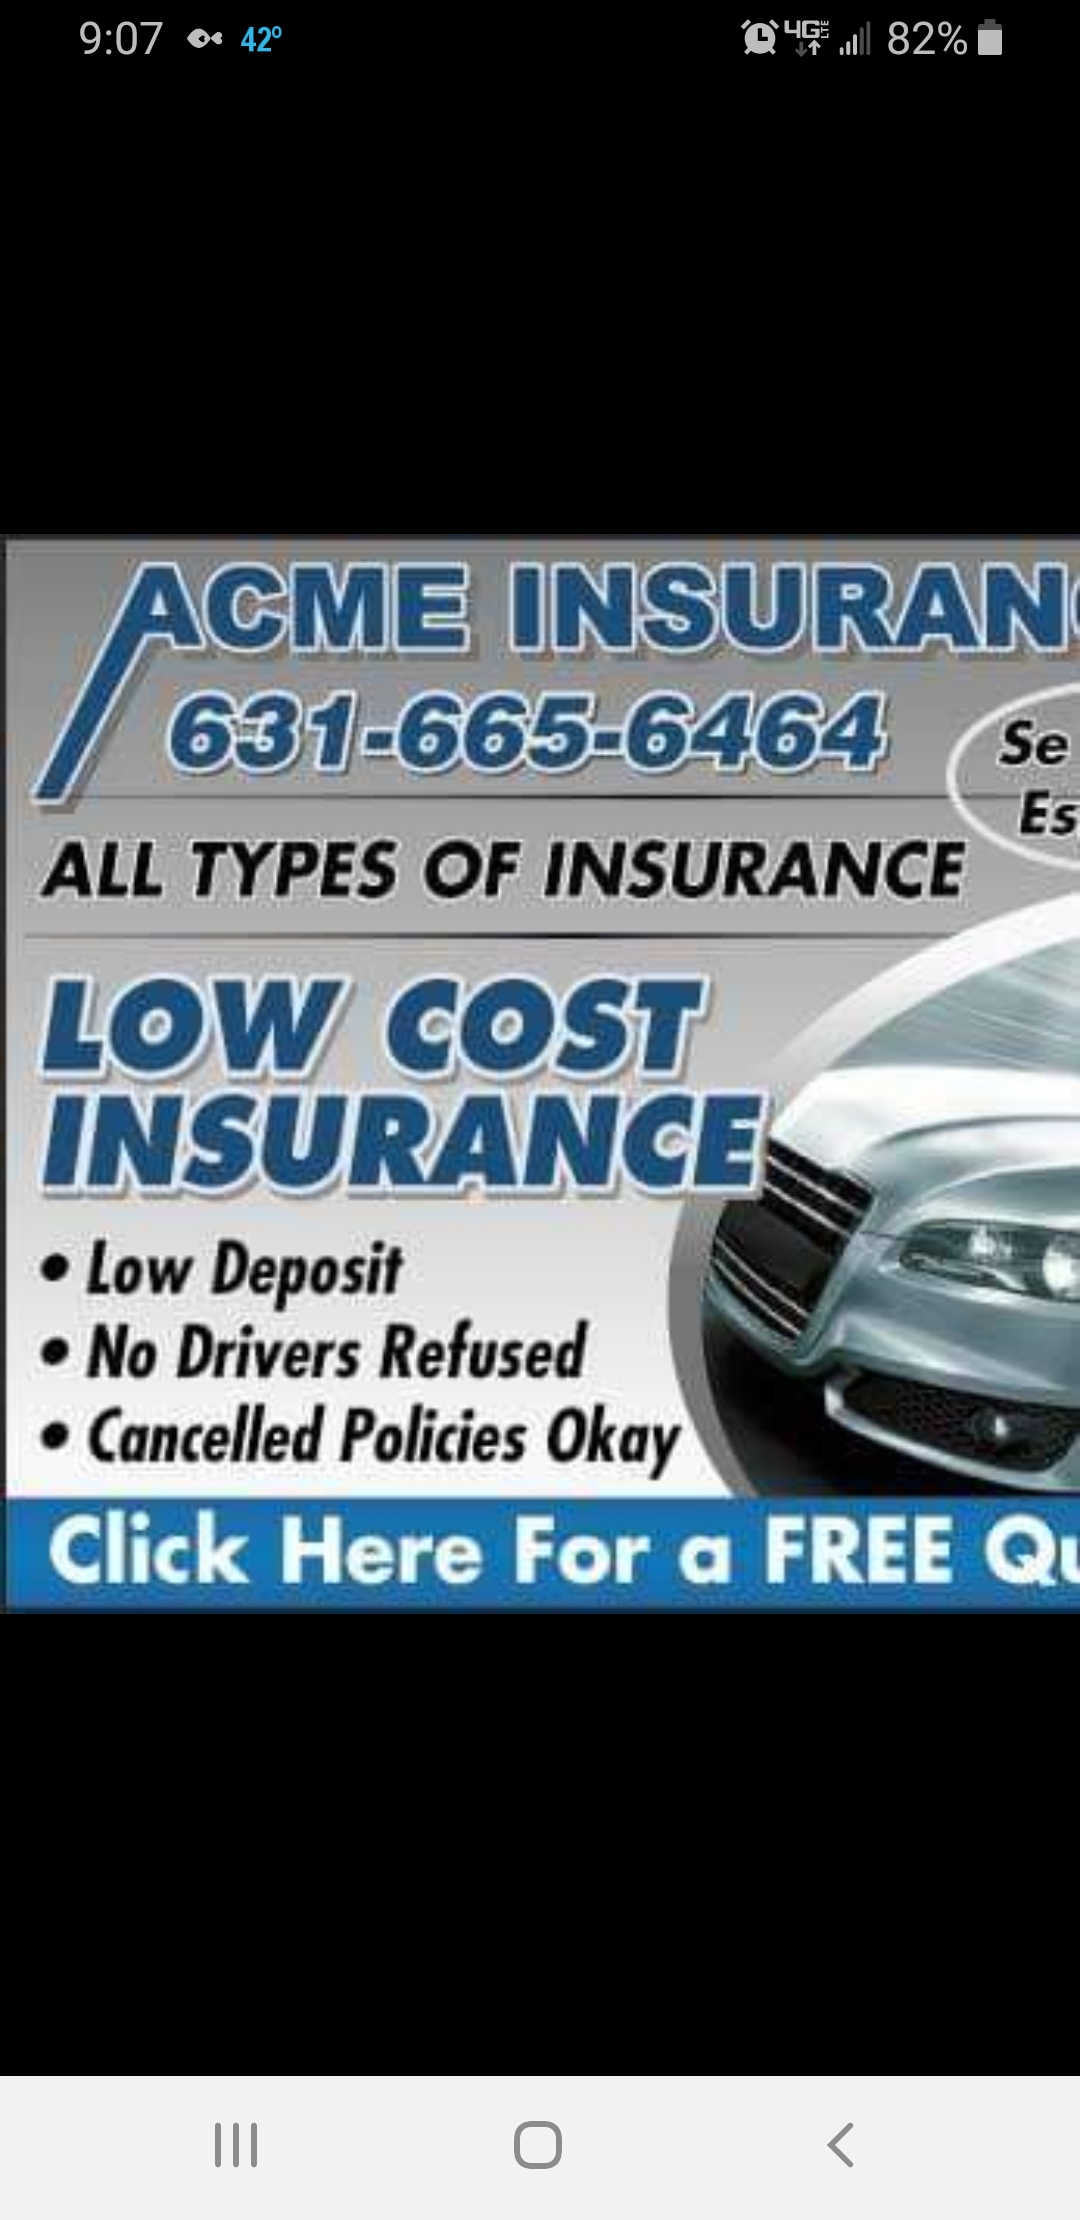 Acme Insurance Bkrge of Ba